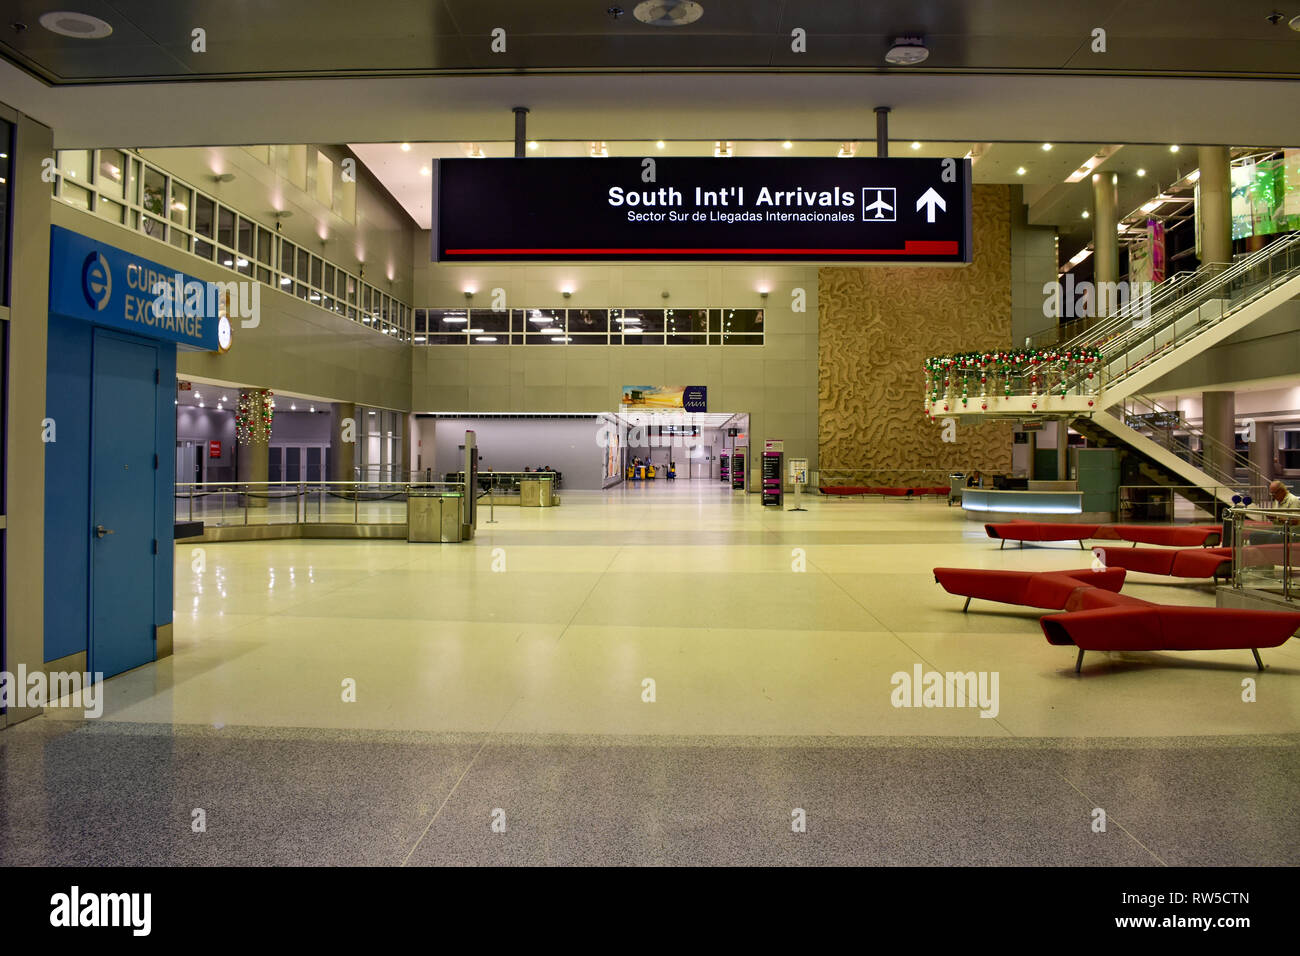 Miami, Florida. January 05, 2019. South International arrivals sign  at Miami International Airport. Stock Photo